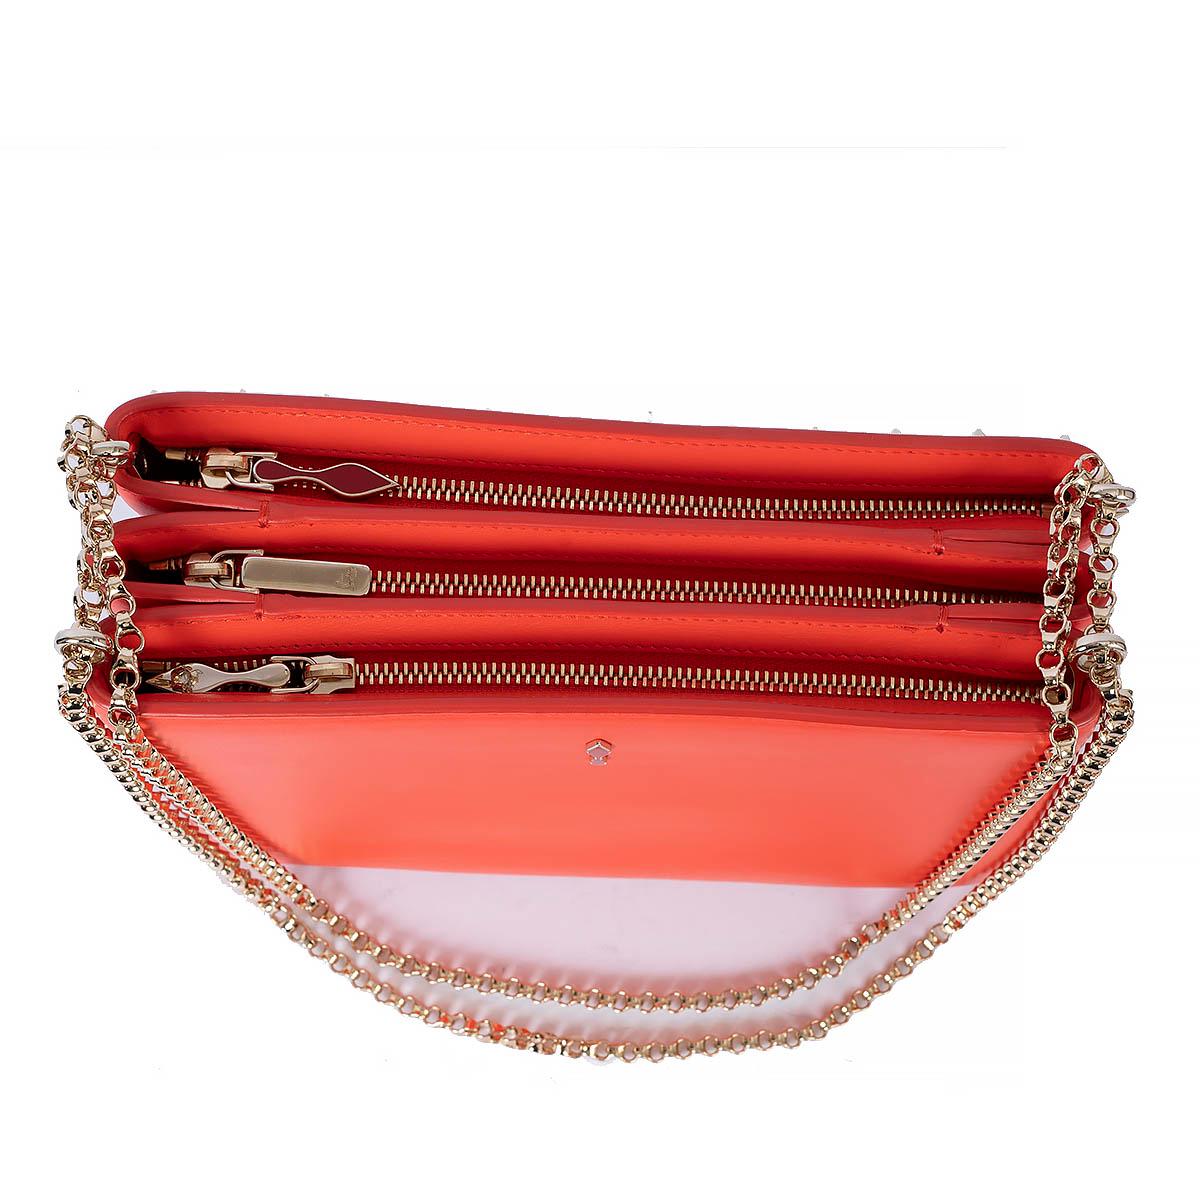 CHRISTIAN LOUBOUTIN coral red TRILOUBOUI LARGE SPIKED Shoulder Bag For Sale 2